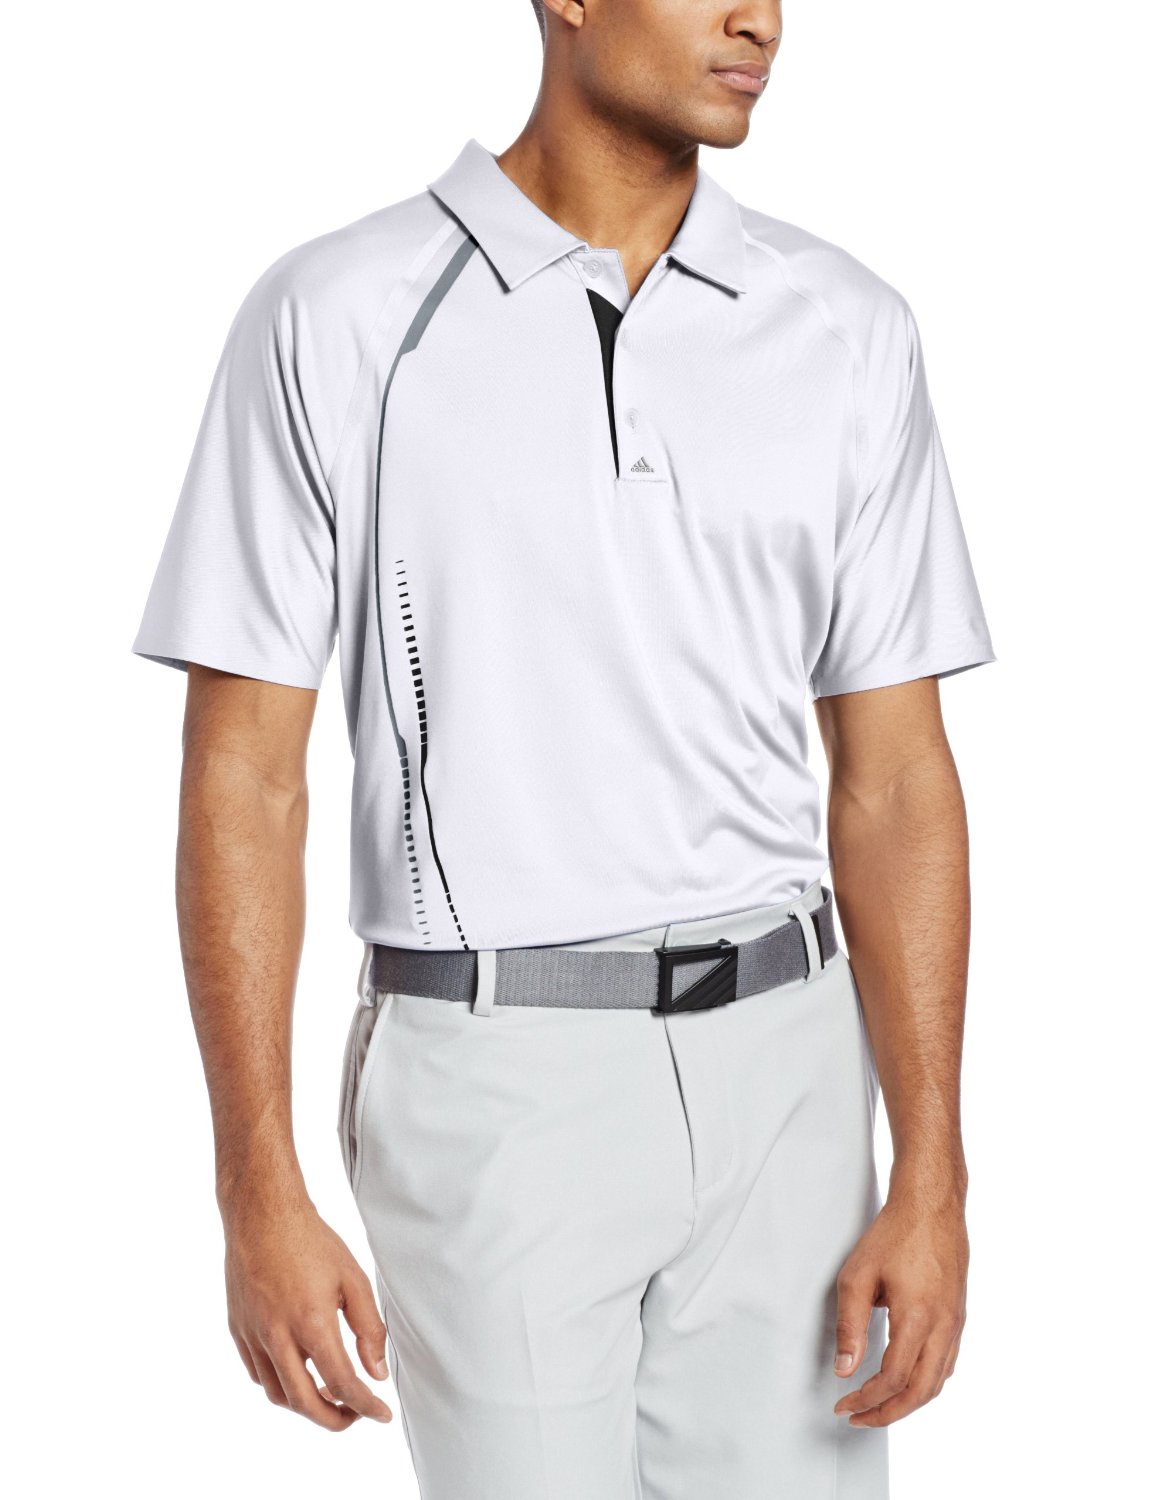 Adidas Puremotion Tour Climacool Graphic Print Golf Polo Shirts